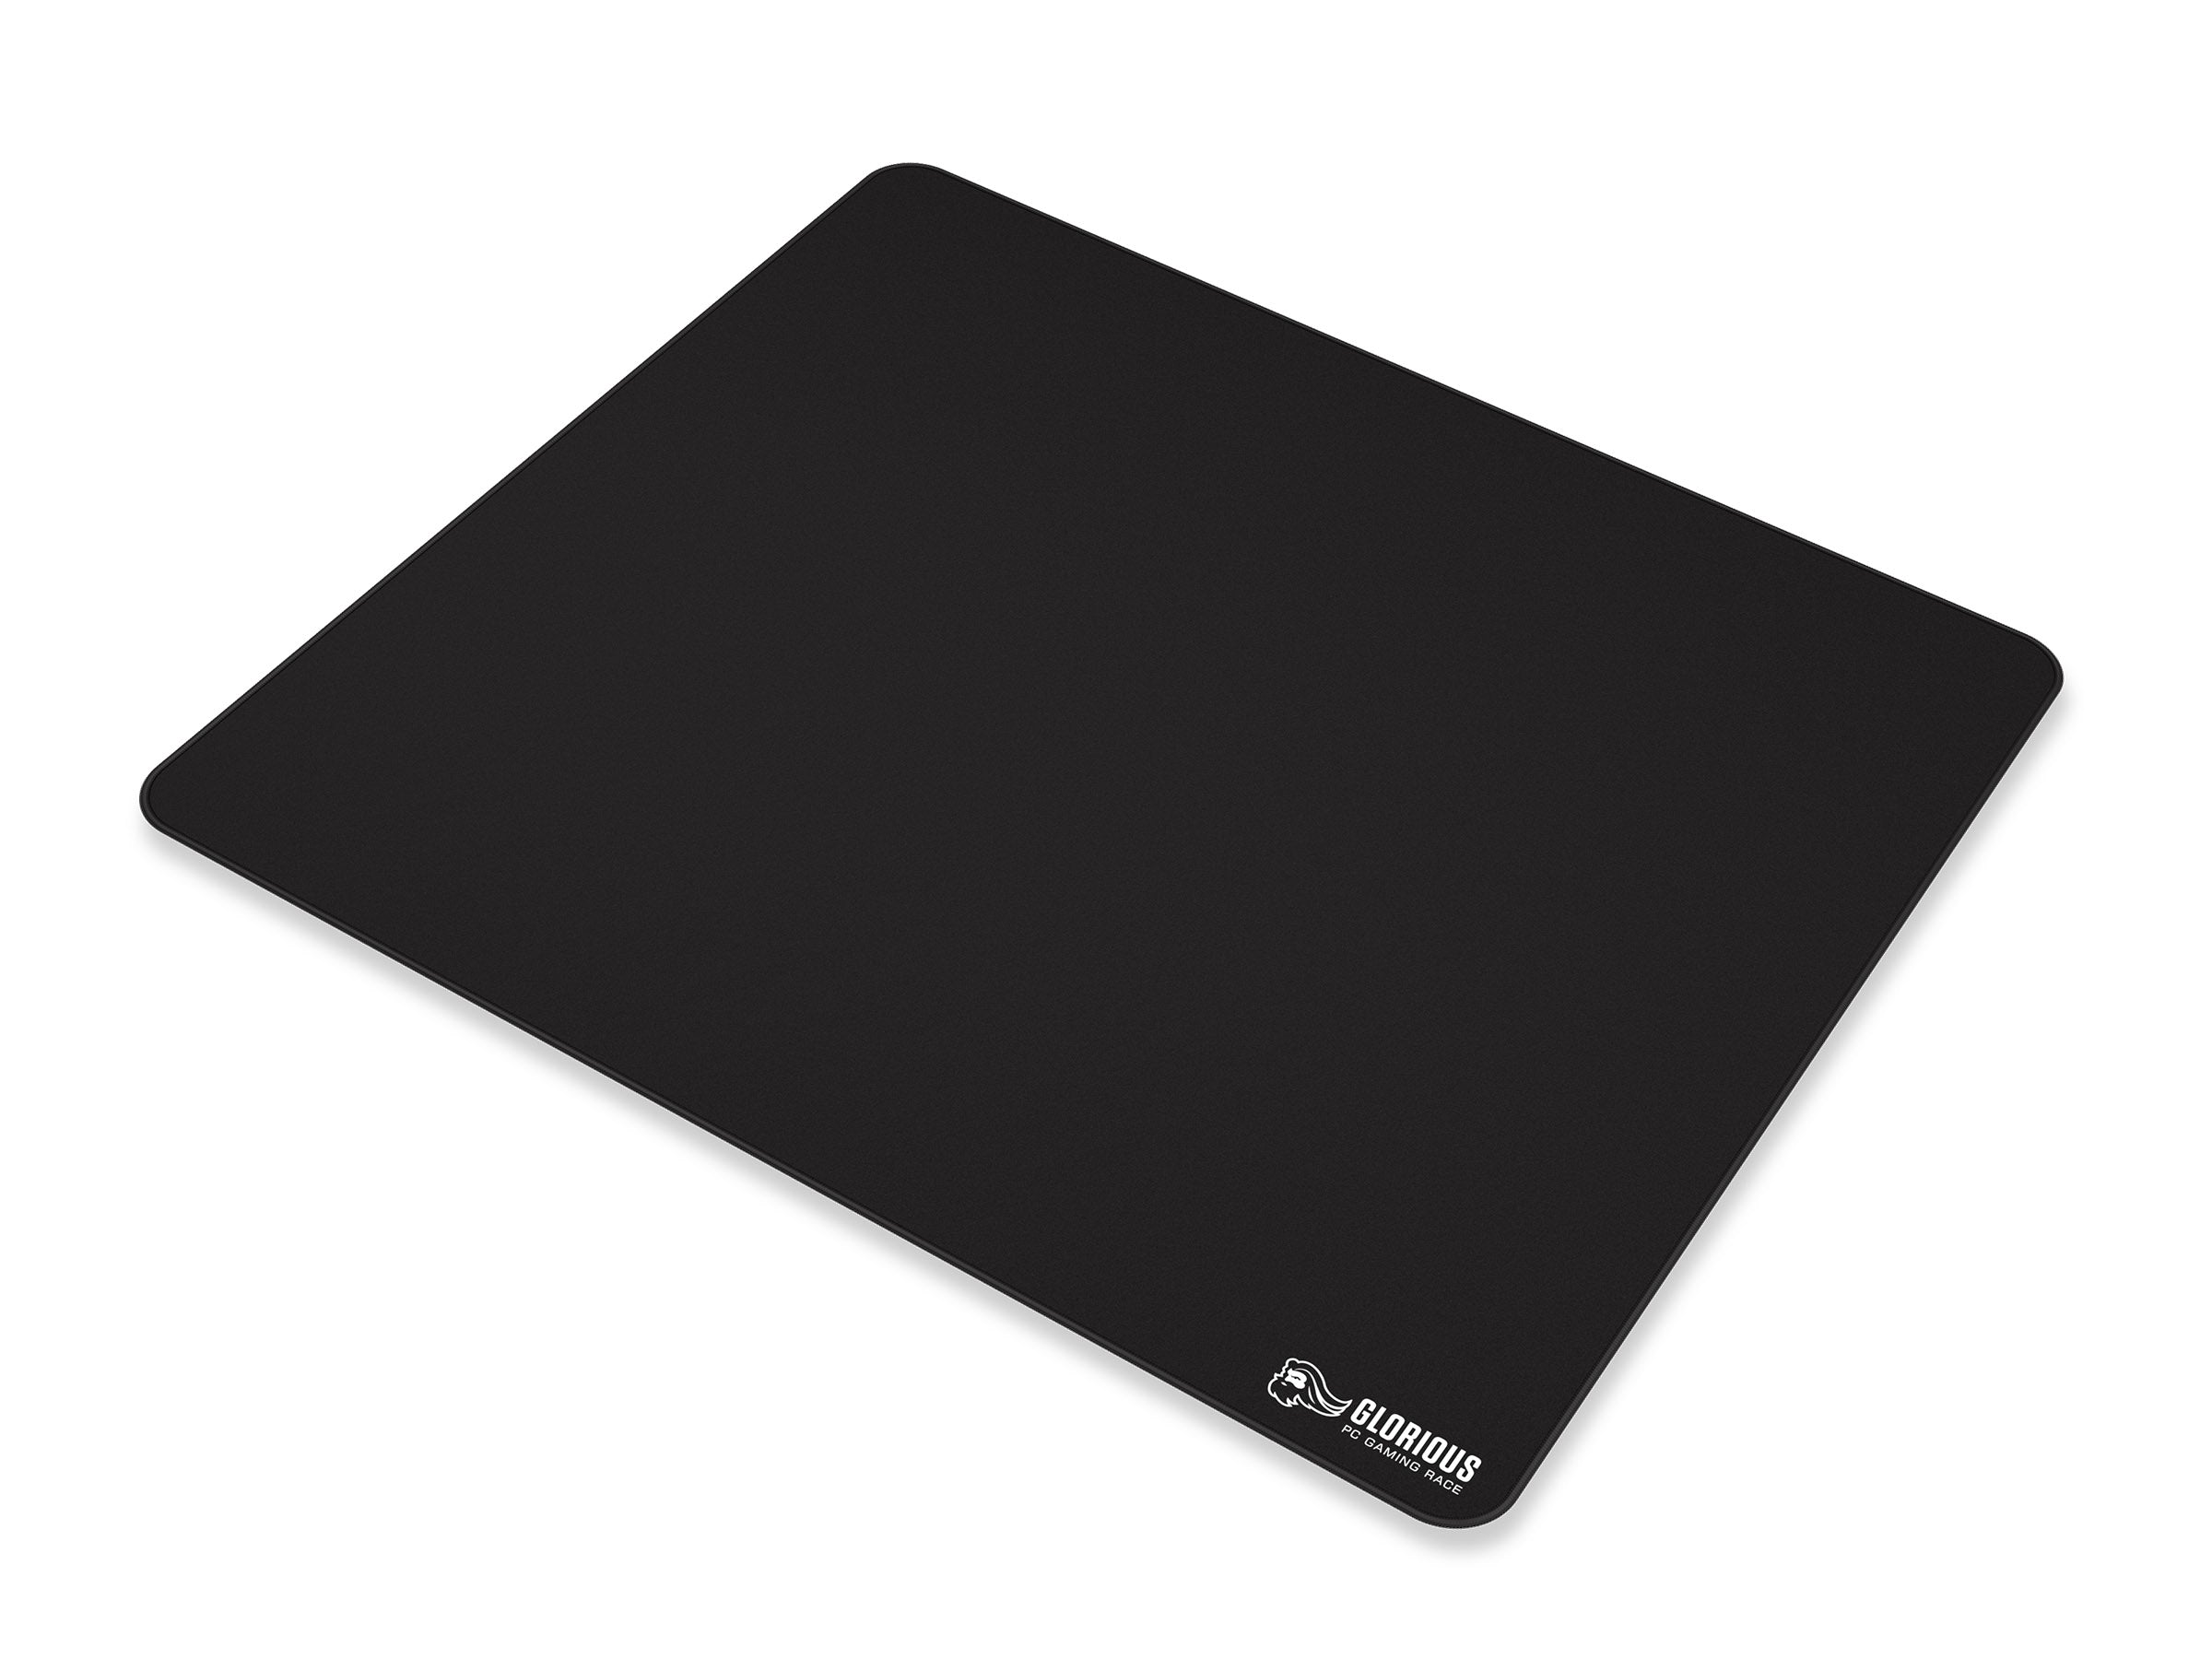 Glorious PC XL Black Desk / Mouse Pad MK06BGDVI4 |27431|